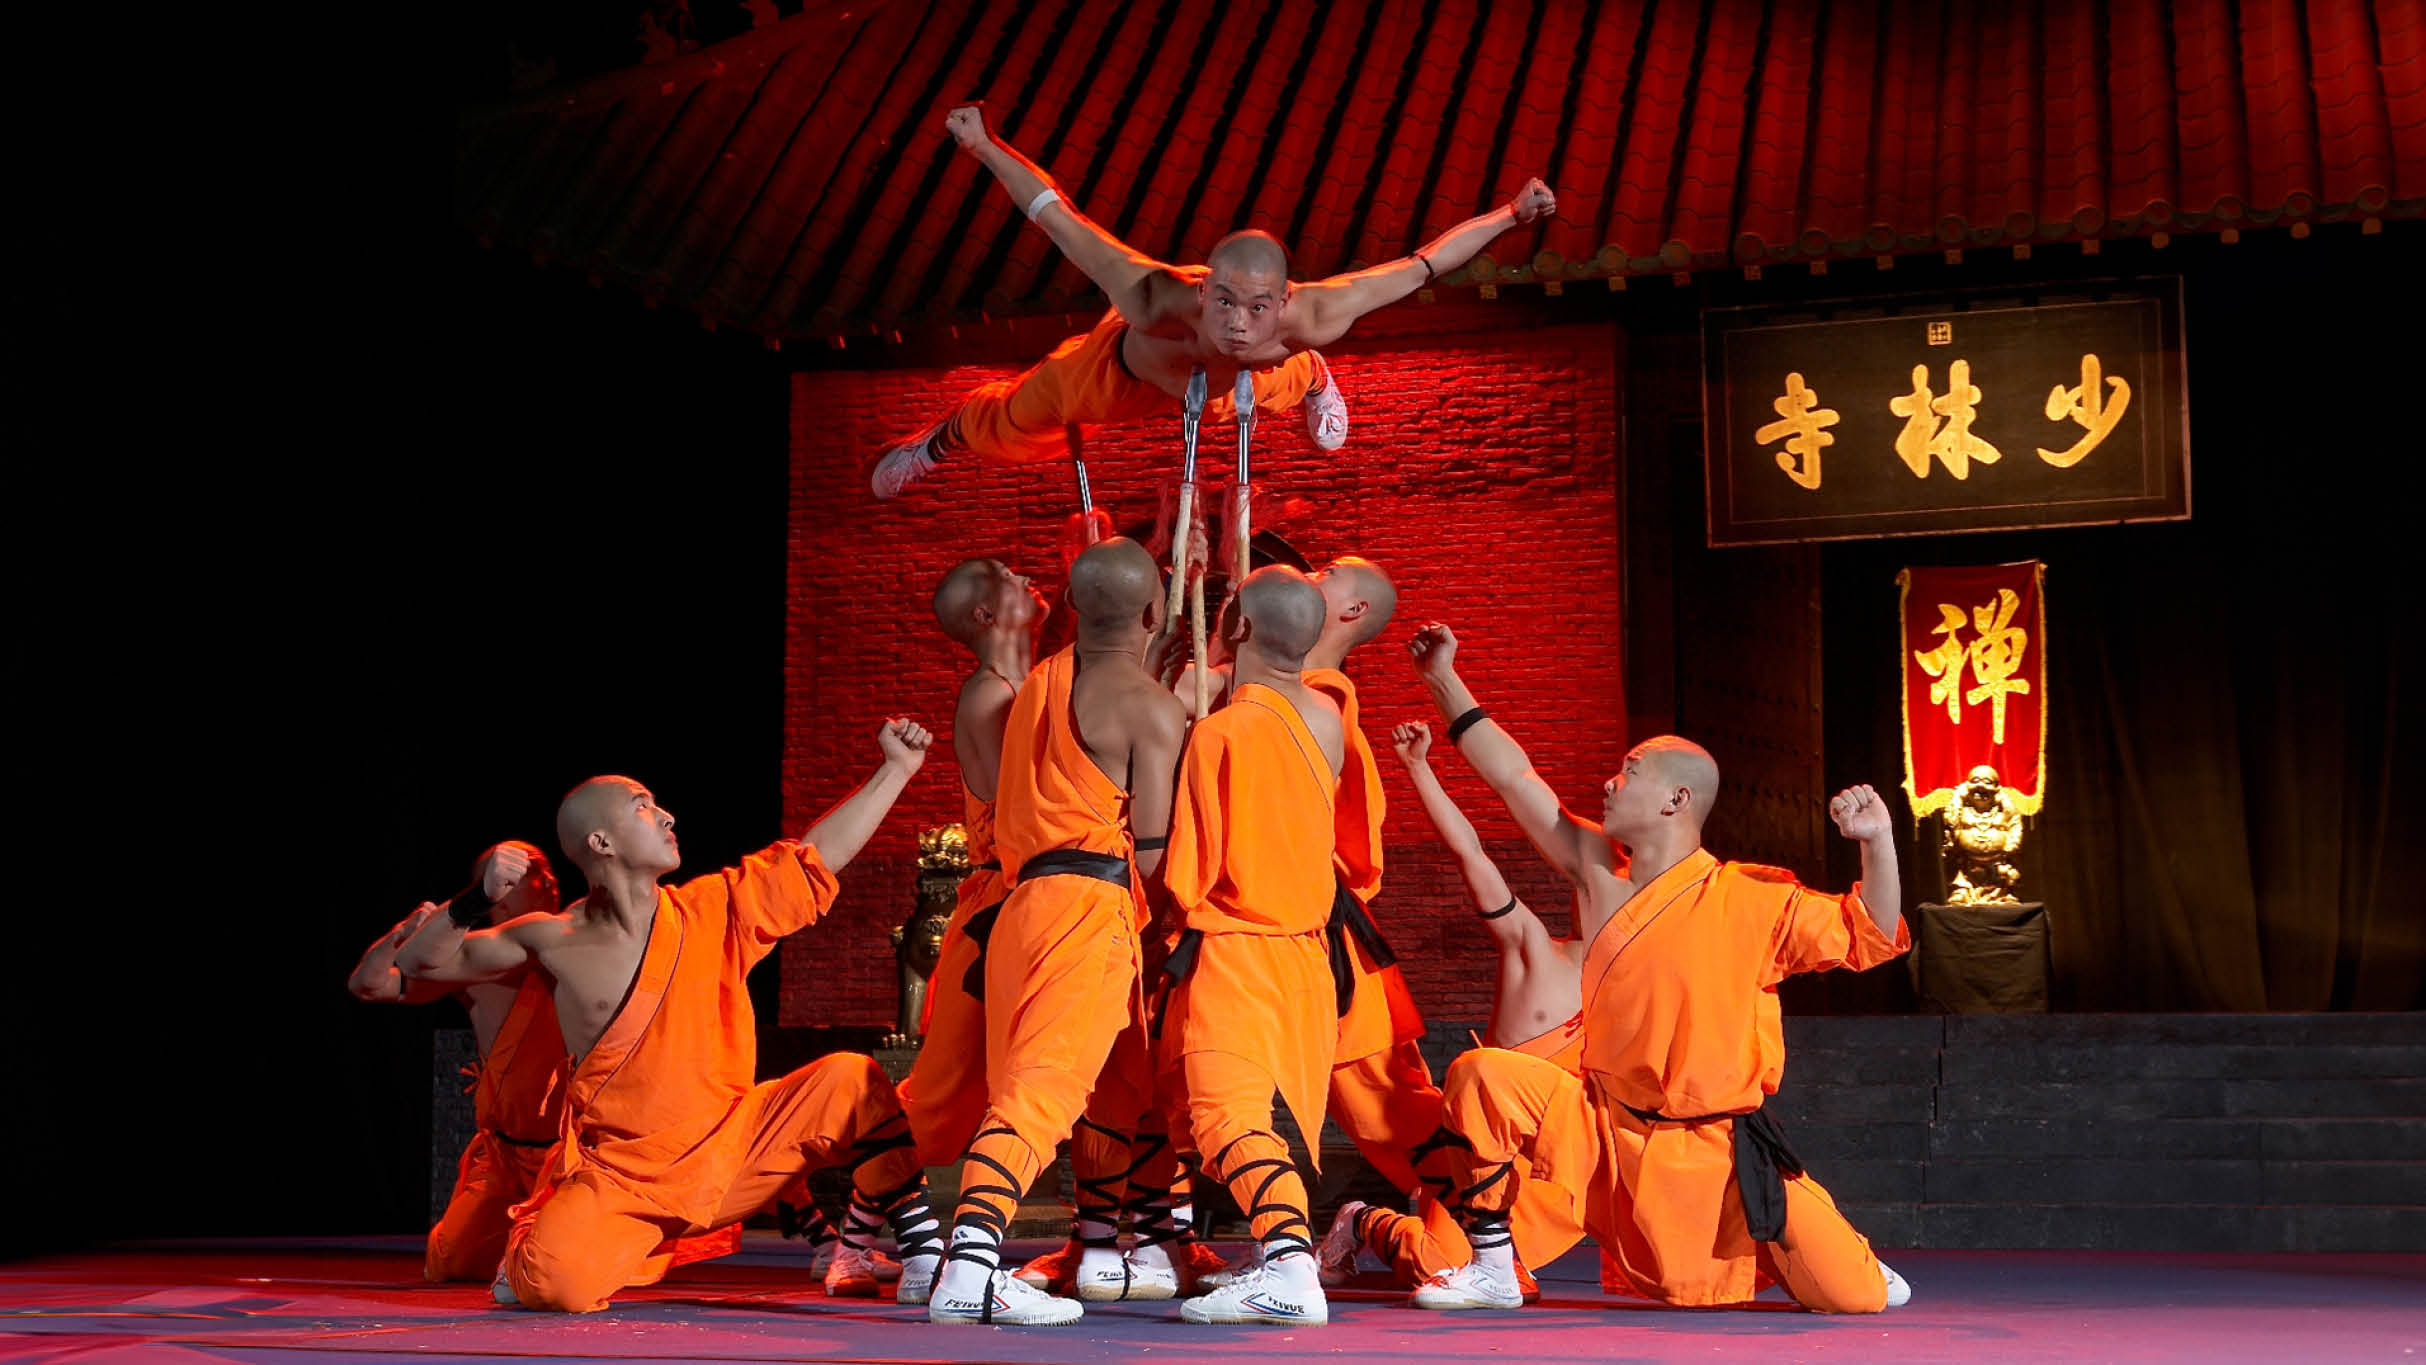 Shaolin Monks - Wheel of Life presale information on freepresalepasswords.com